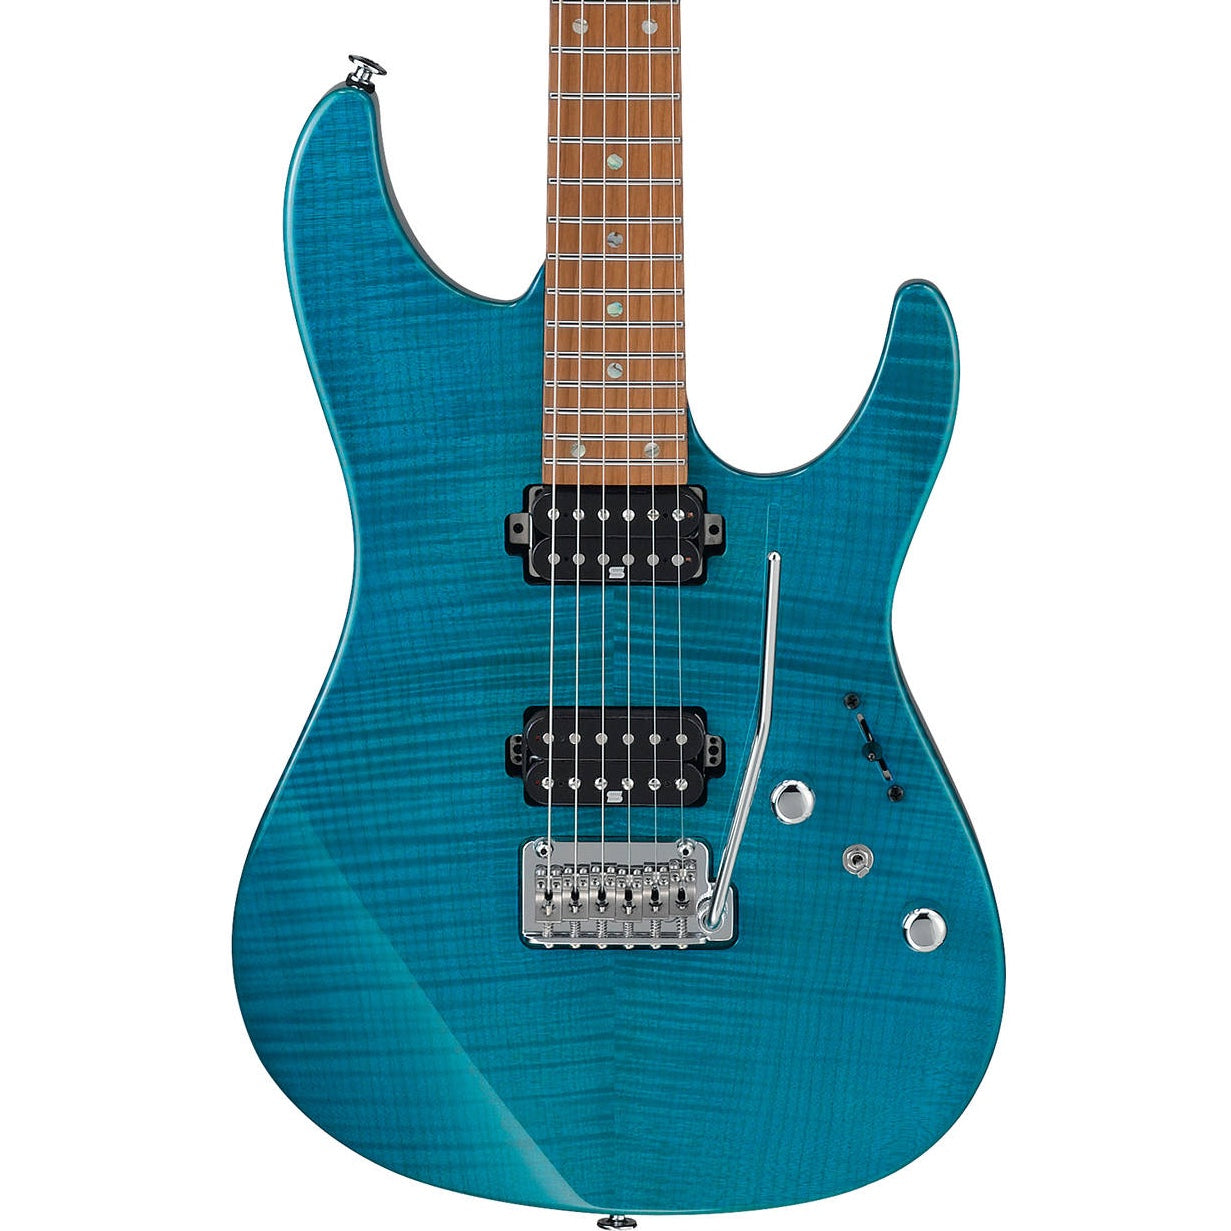 Ibanez MM1-TAB Martin Miller Signature Electric Guitar Transparent Aqua Blue | Music Experience | Shop Online | South Africa